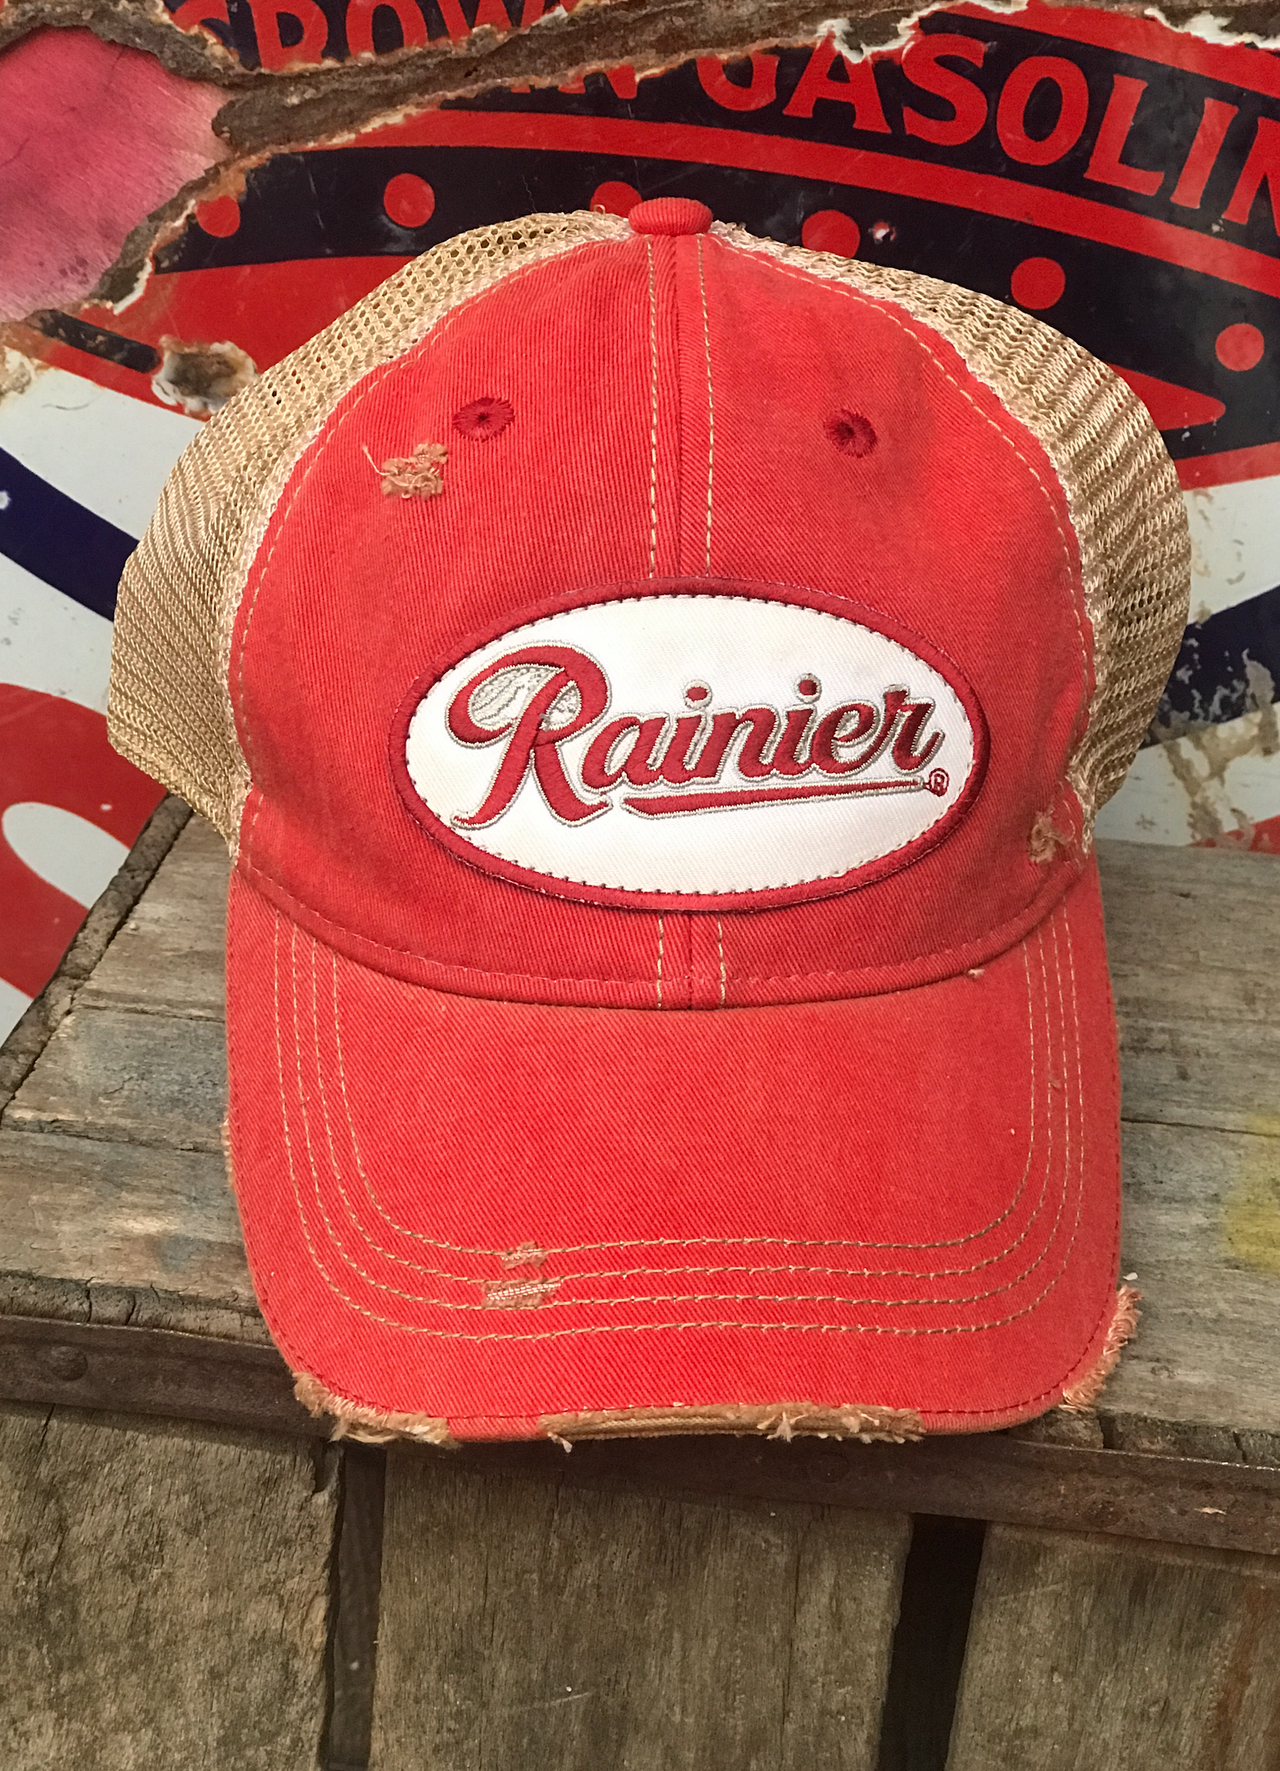 Rainier Beer Clothing Line